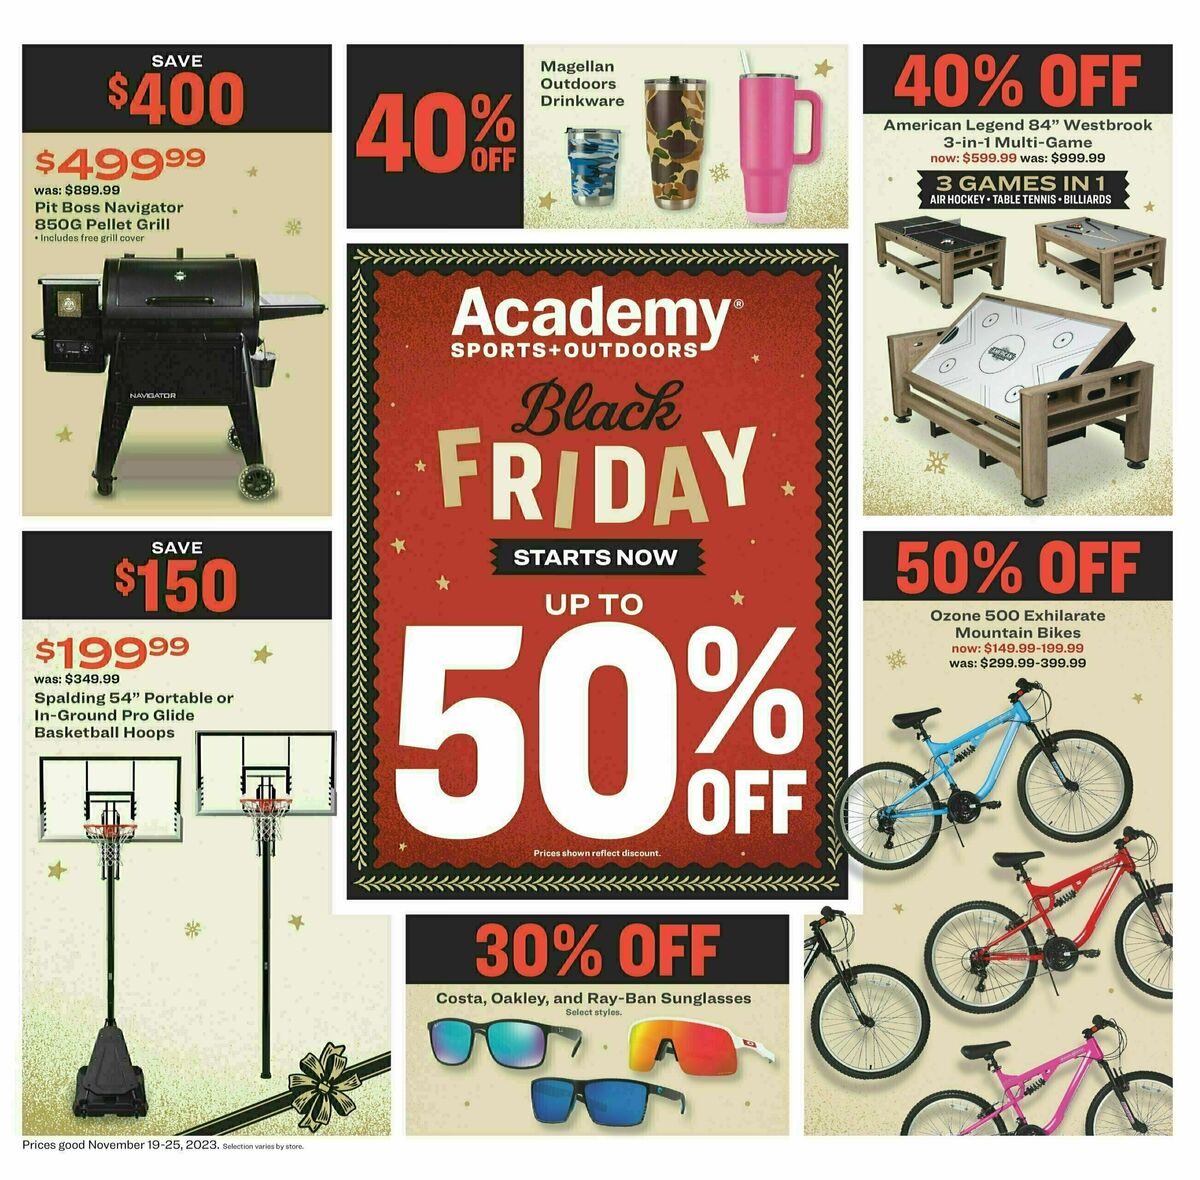 Academy Sports + Outdoors Weeklong Black Friday Weekly Ad from November 20